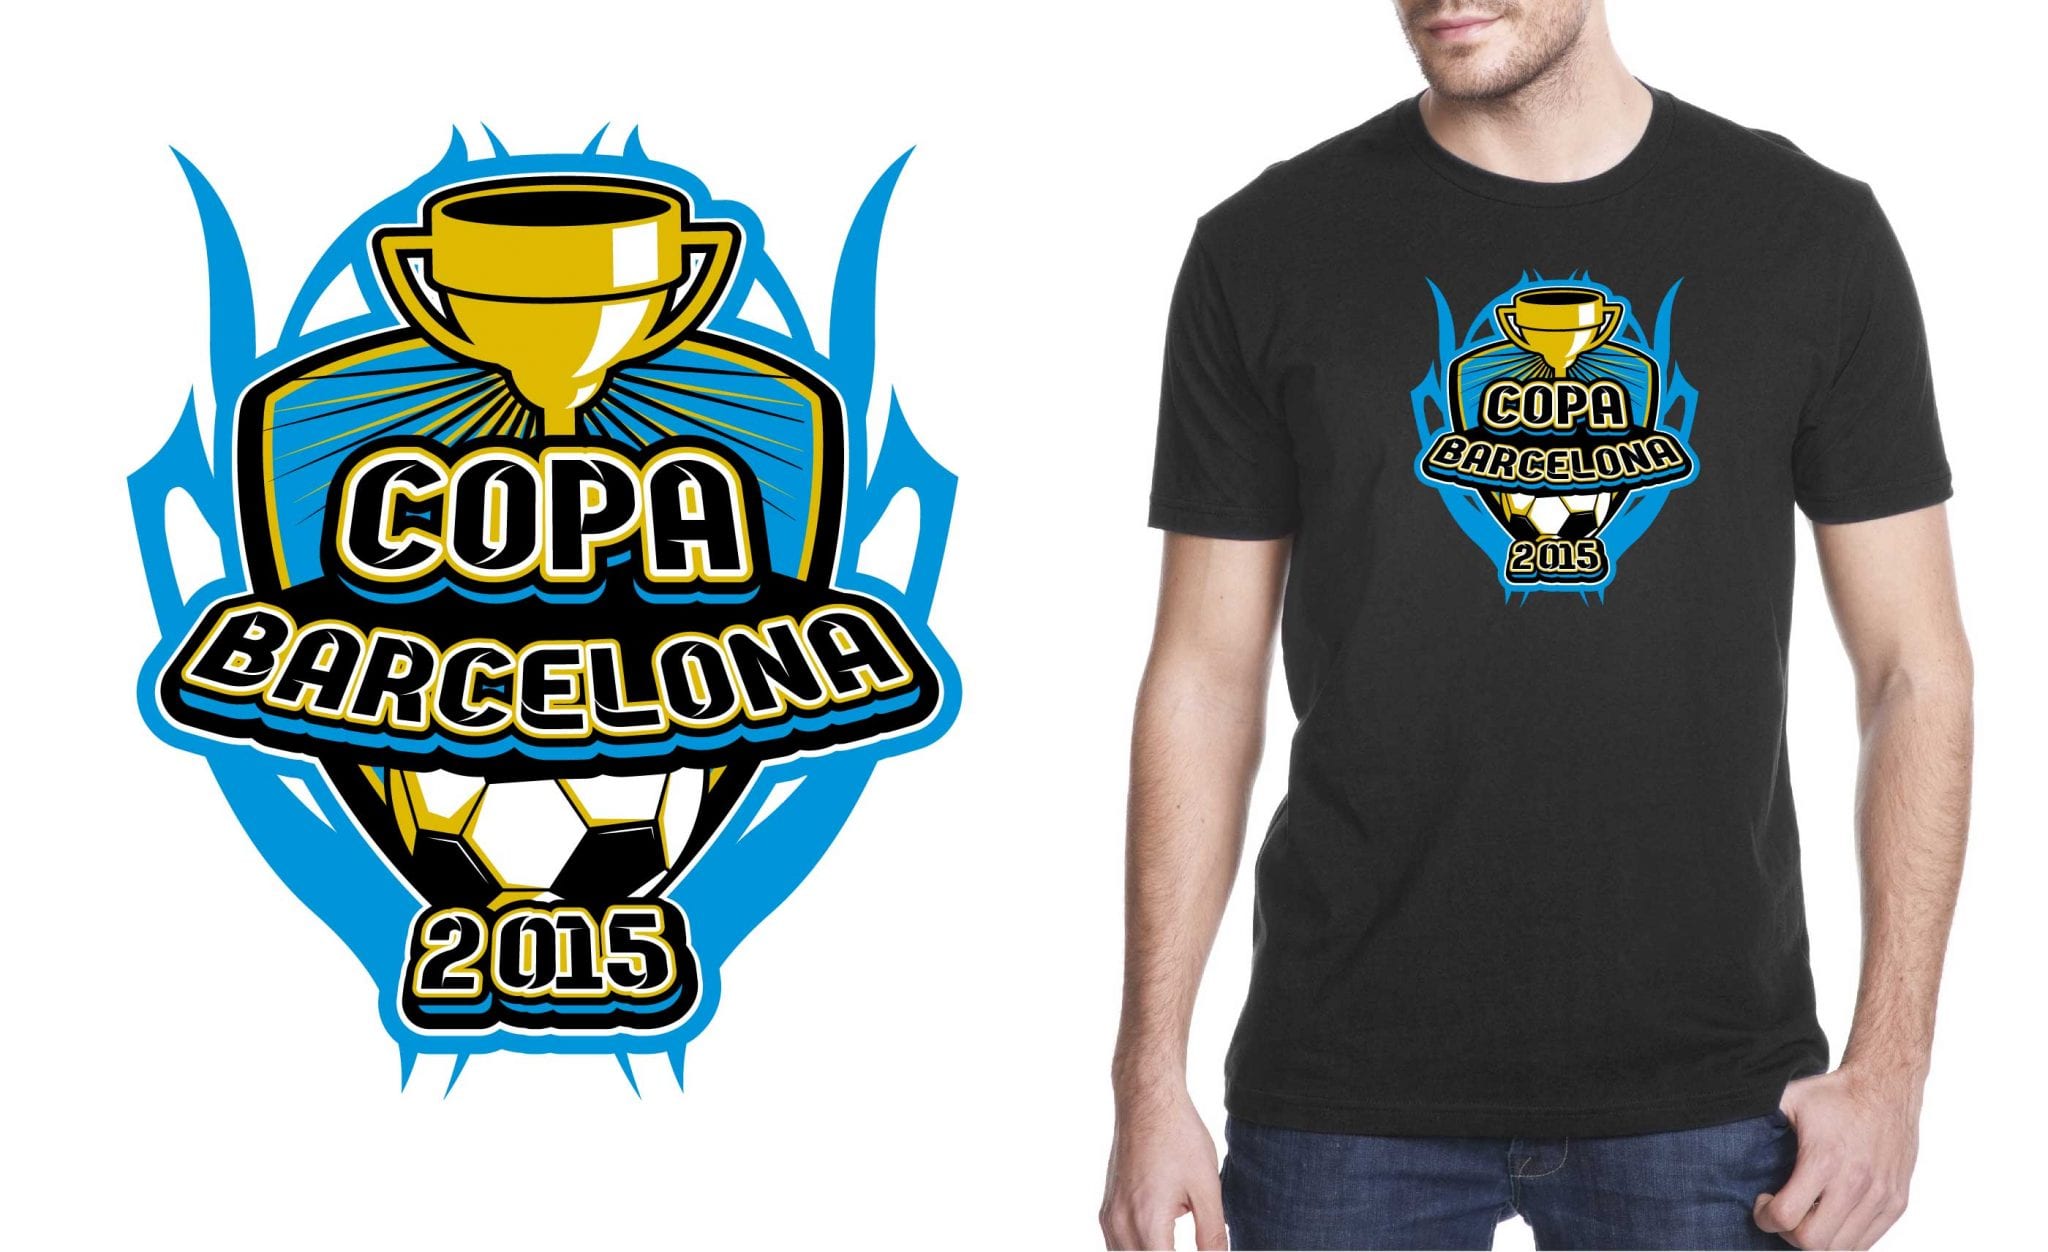 Eyecatching vector logo design for soccer event for tshirt 2015 Copa Barcelona